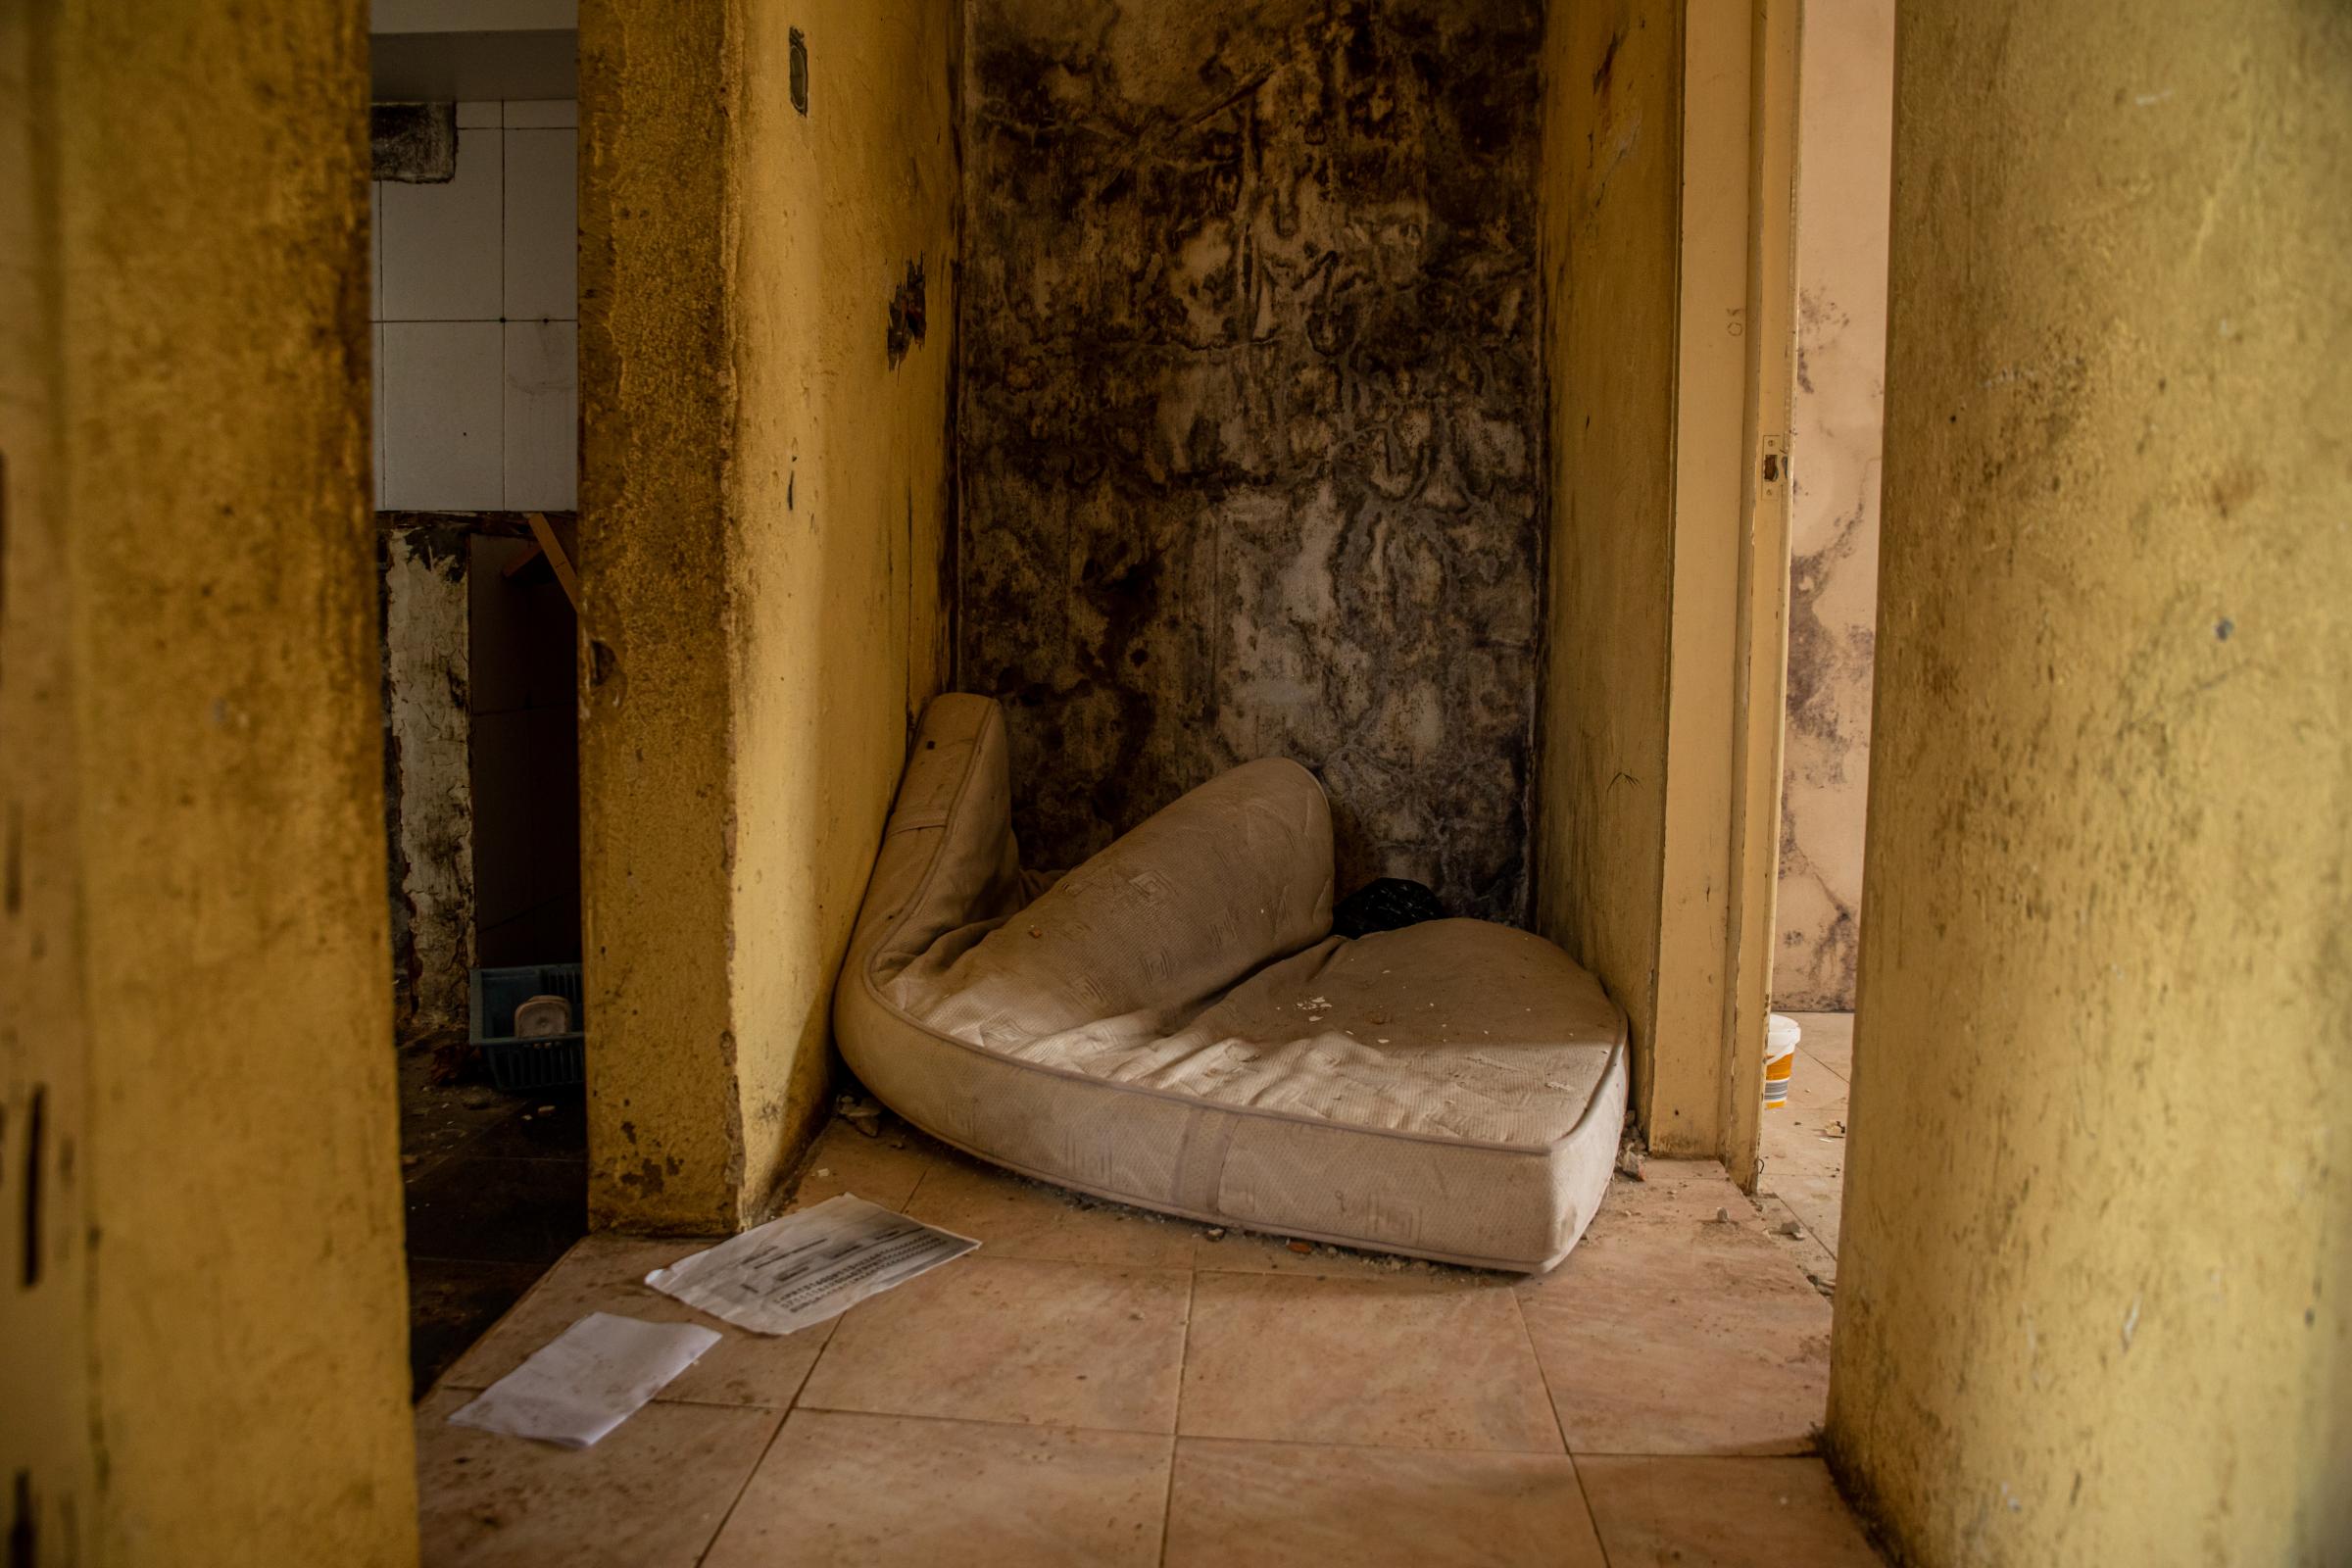 The Aftermath 2º Torrão - October 21, 2022 - Abandoned house during the demolitions.